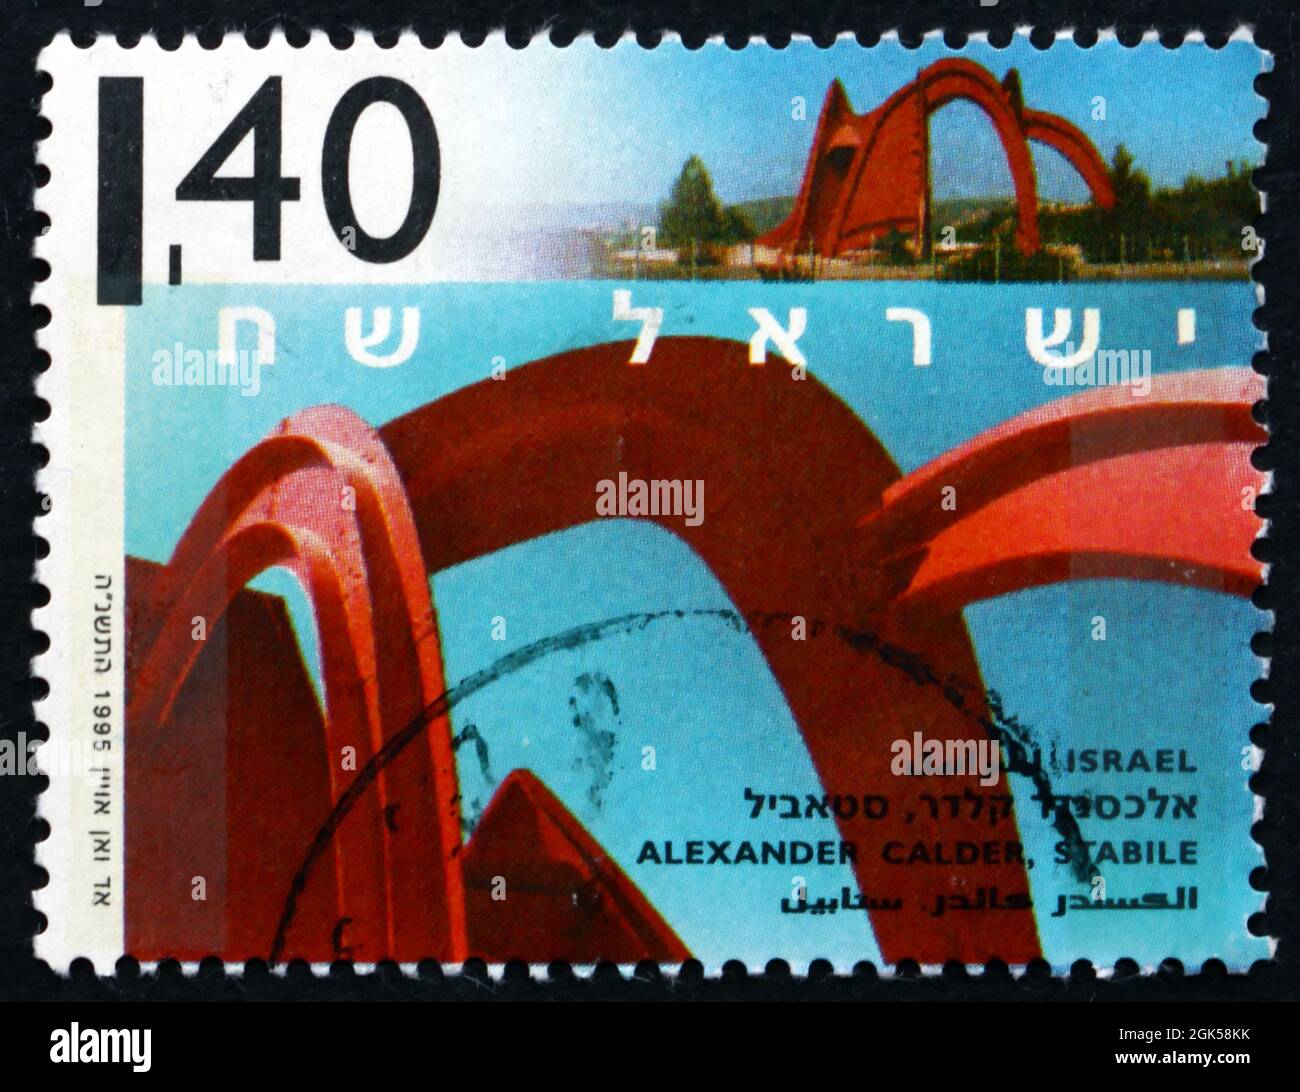 ISRAËL - VERS 1995: Un timbre imprimé en Israël montre Stabile Outdoor Sculpture par Alexander Calder American Sculptor, vers 1995 Banque D'Images